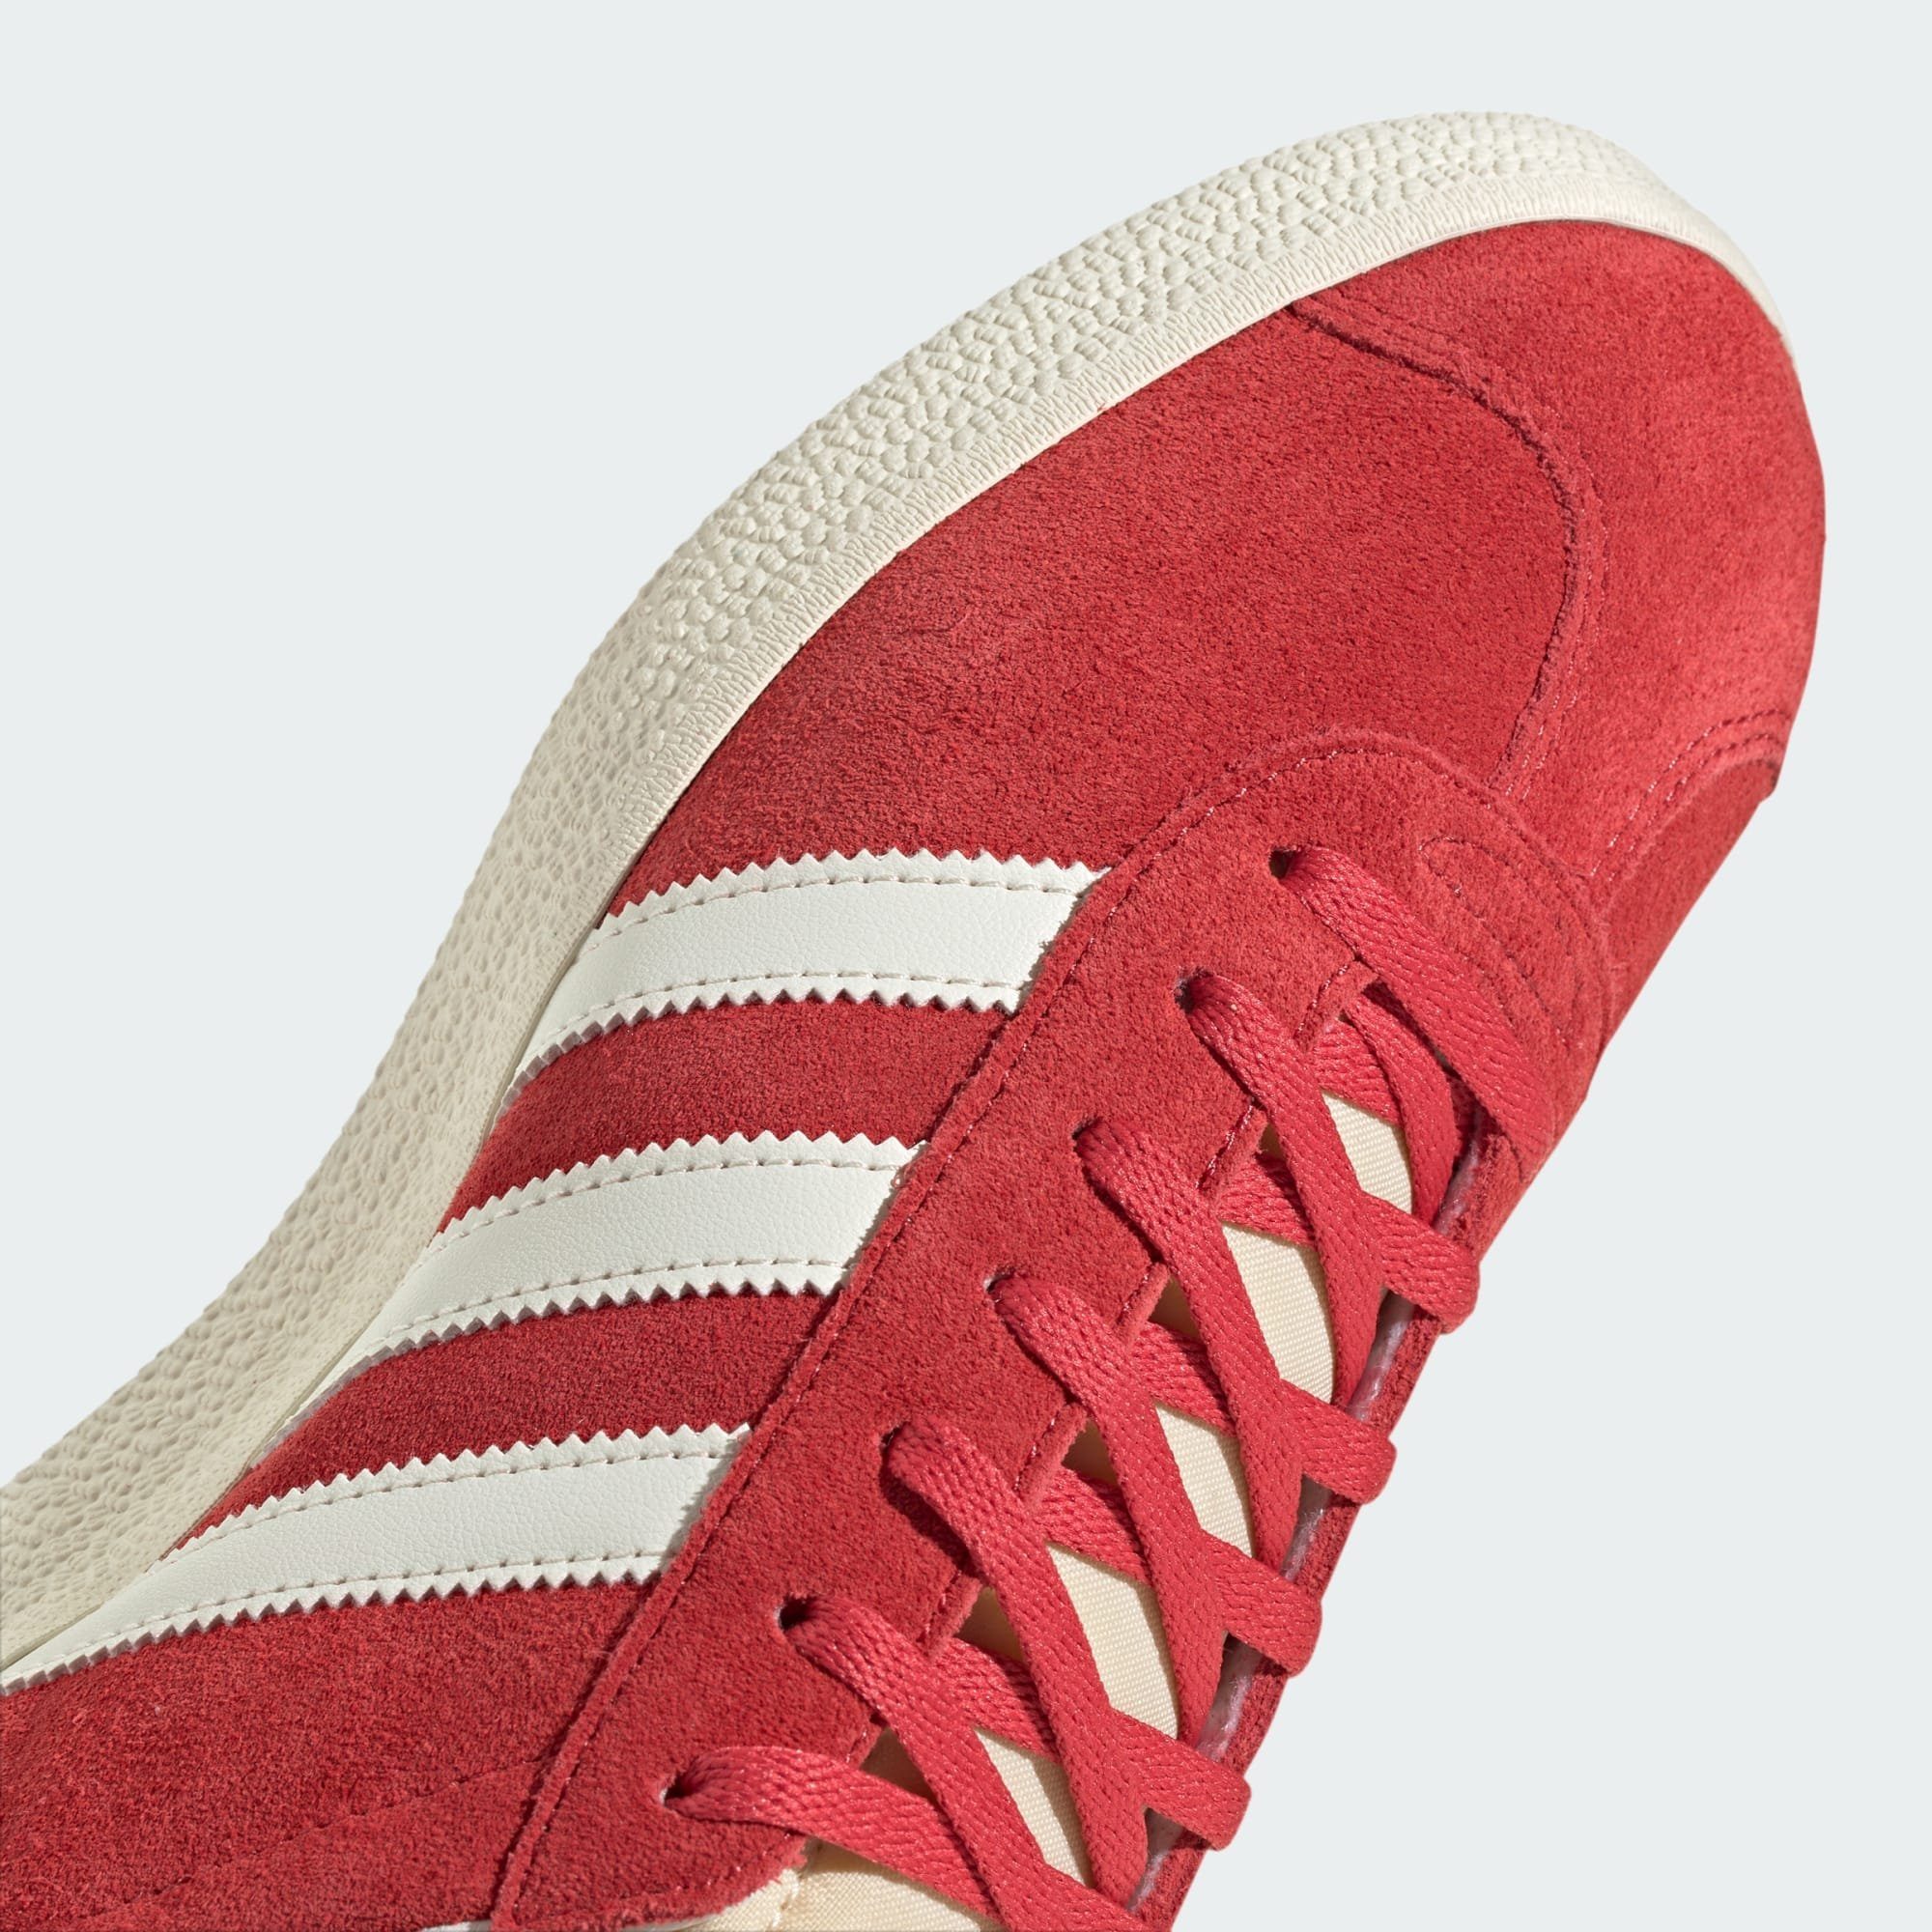 SCHUH Originals Glory Cream Off adidas Red White / GAZELLE White / Sneaker